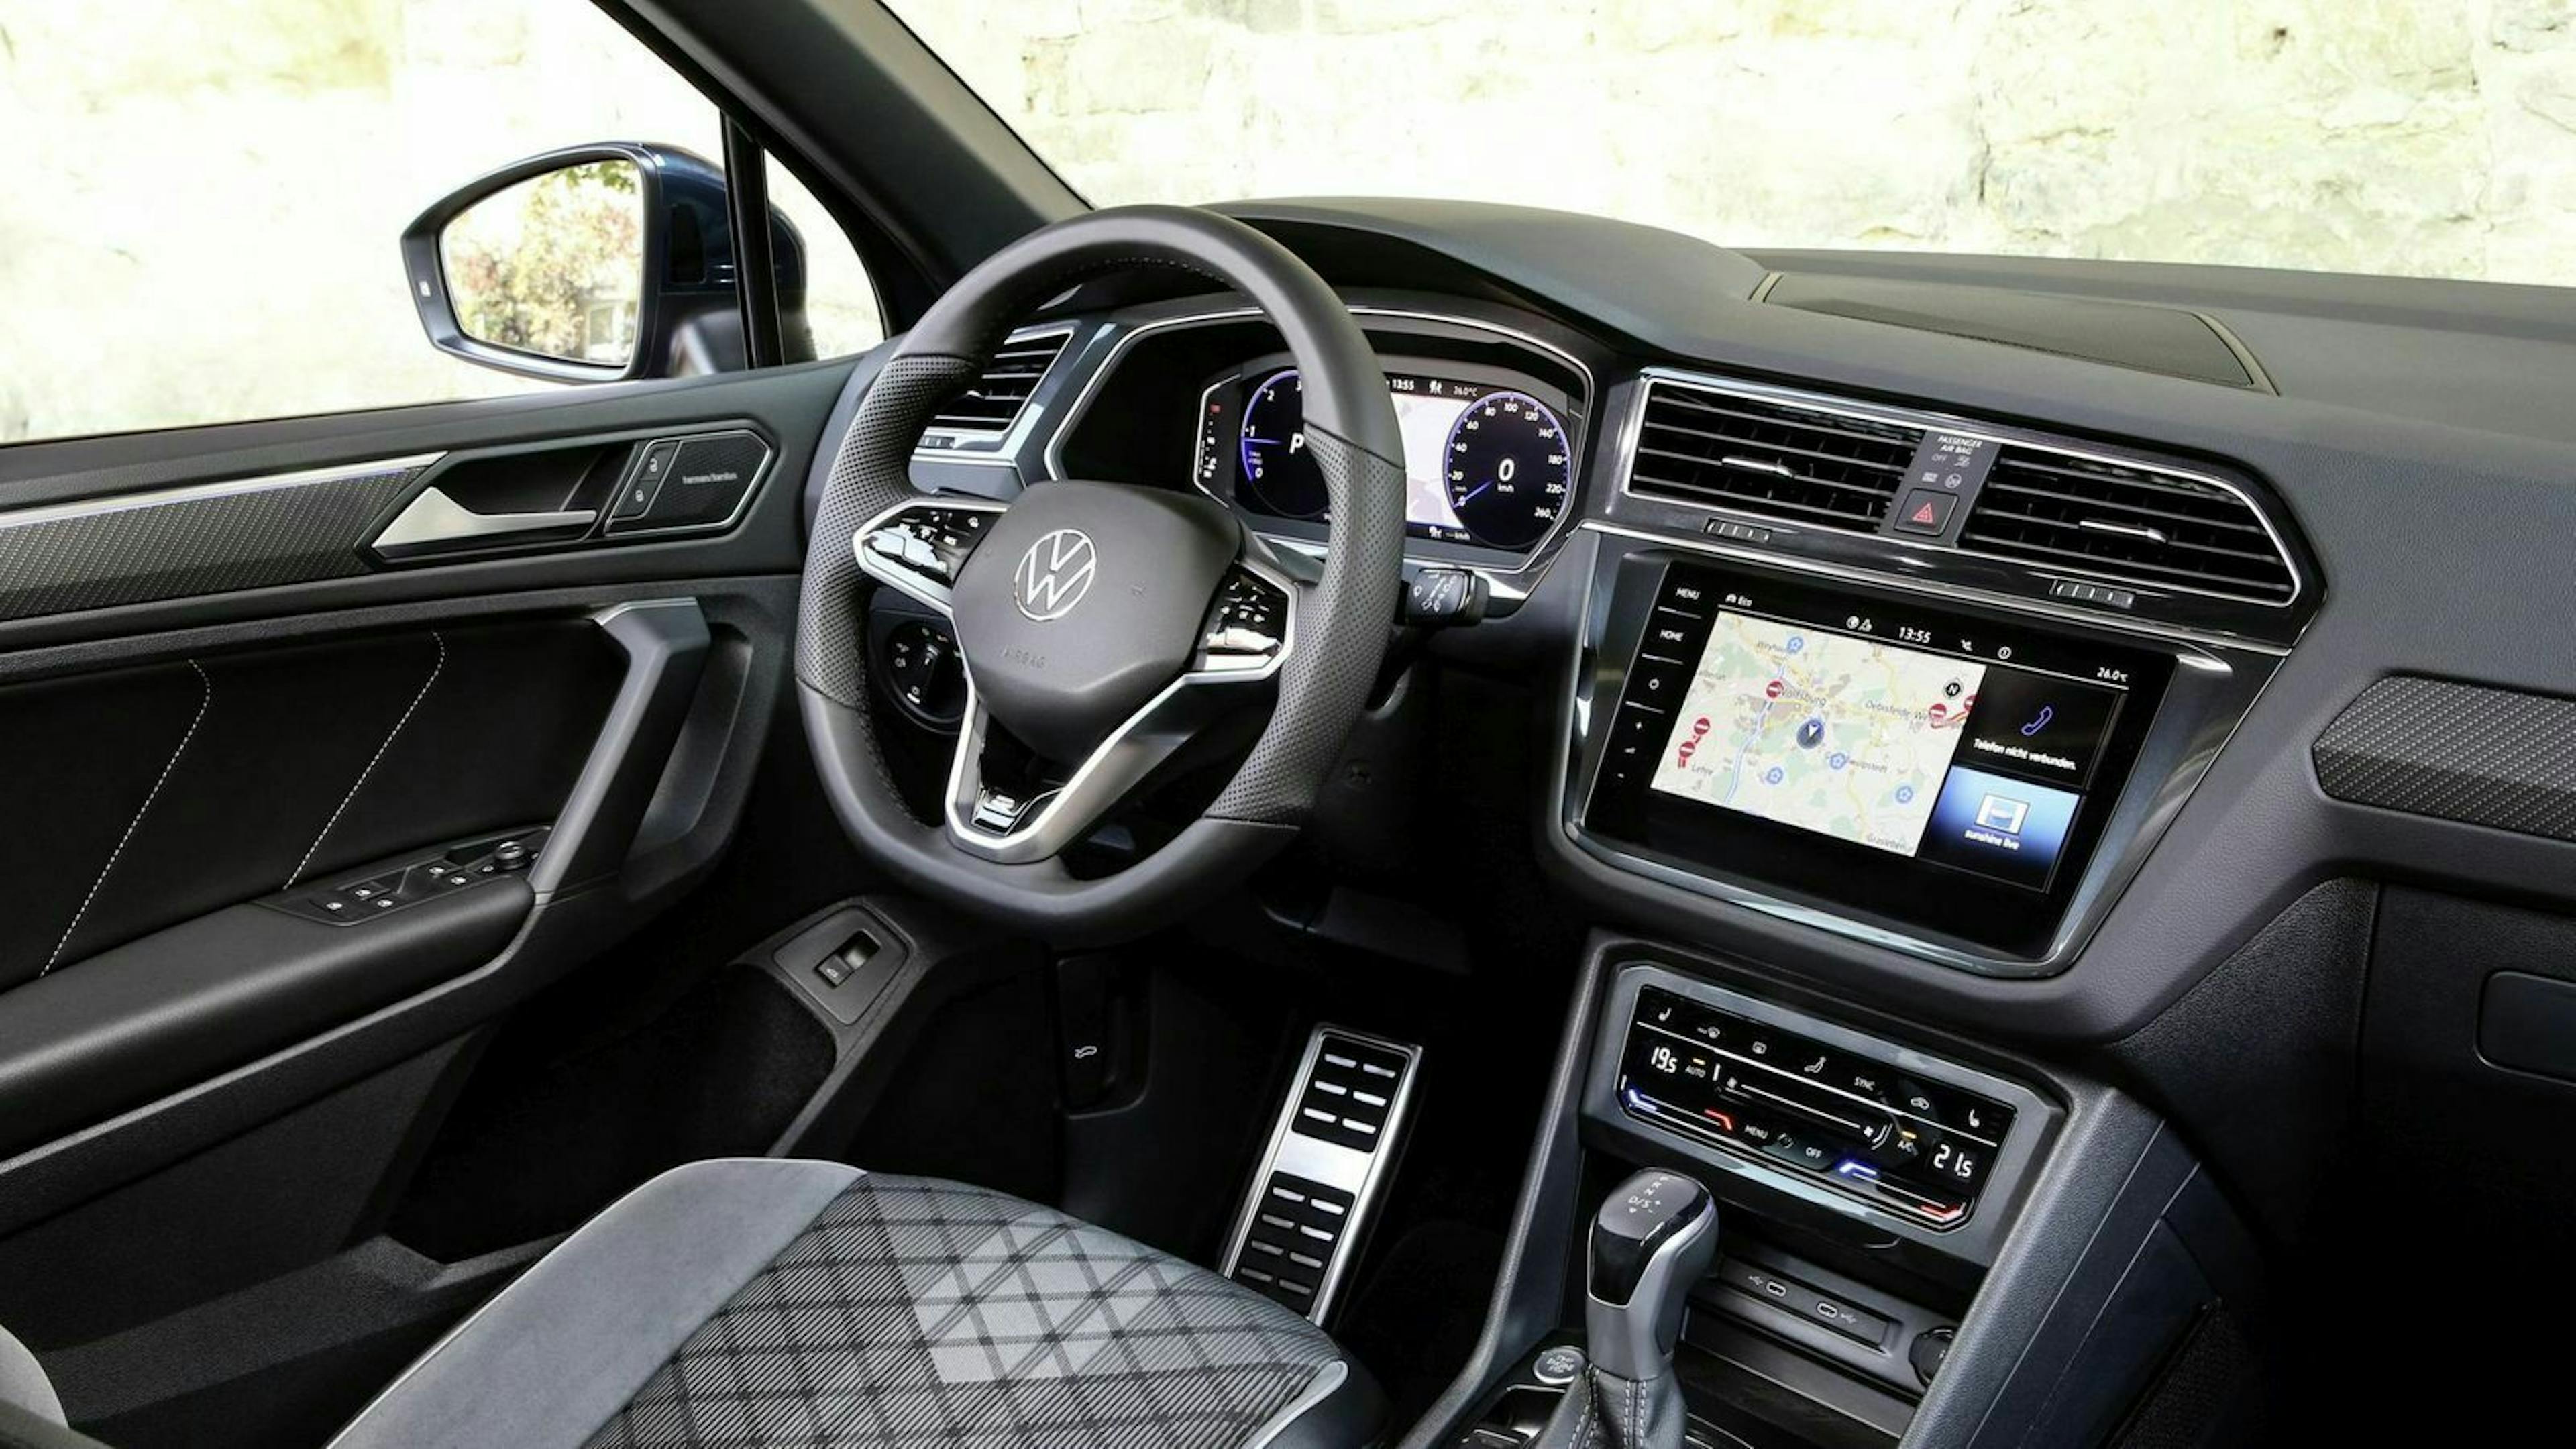 VW Tiguan Cockpit